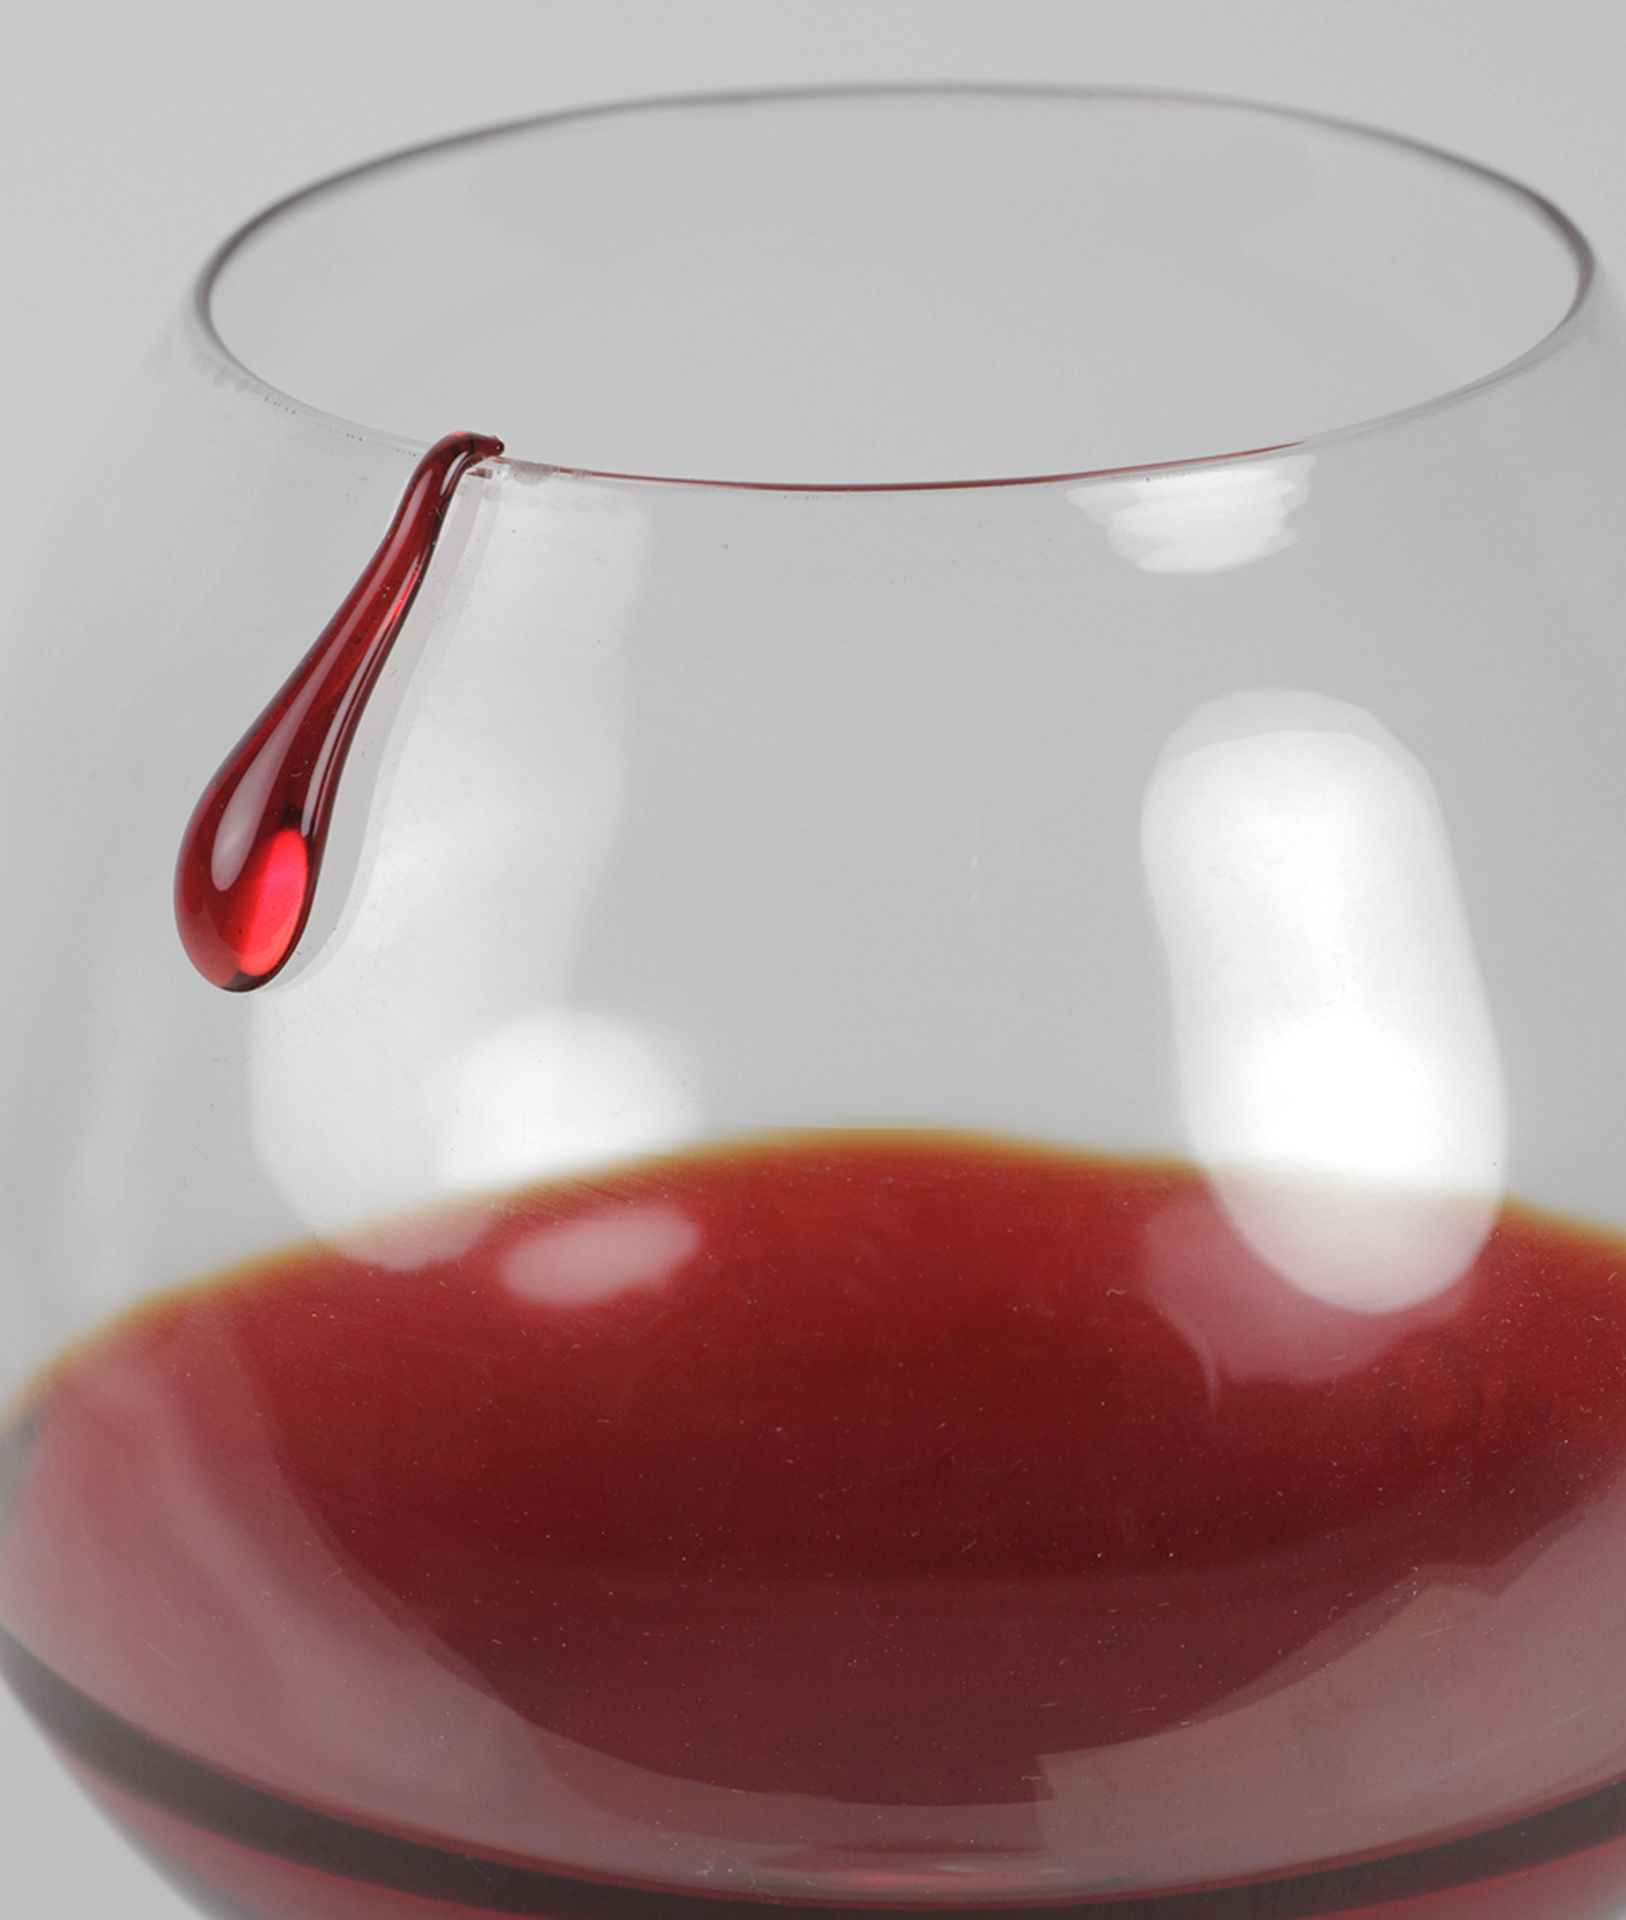 Limited Edn Venetain 'Gocce' Artistic Wine Glass By Maria Grazia Rosin 2004 - Image 9 of 12